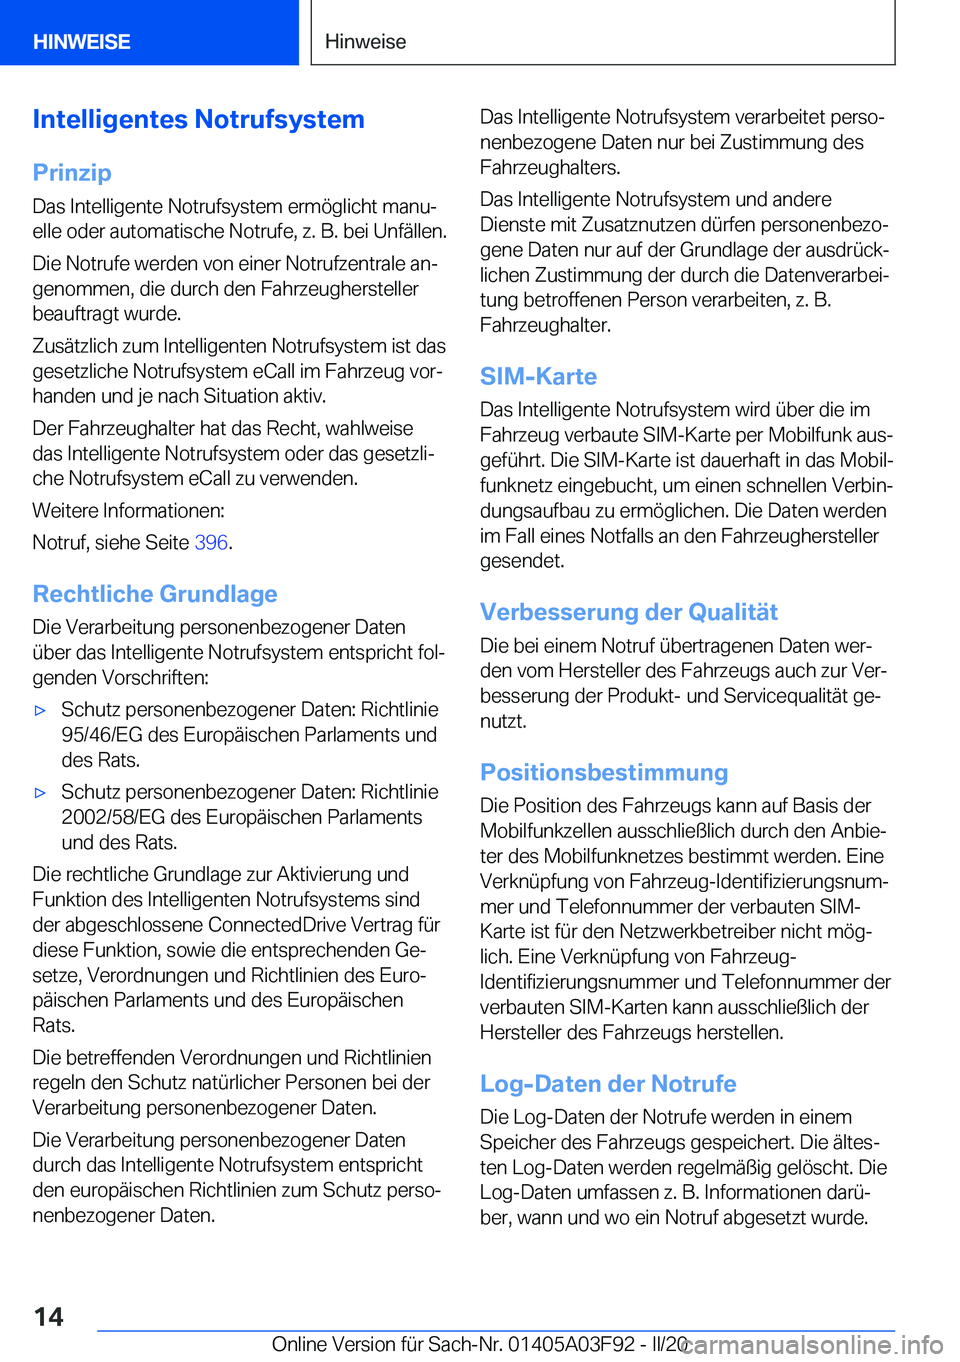 BMW 3 SERIES 2020  Betriebsanleitungen (in German) �I�n�t�e�l�l�i�g�e�n�t�e�s��N�o�t�r�u�f�s�y�s�t�e�m�P�r�i�n�z�i�p
�D�a�s��I�n�t�e�l�l�i�g�e�n�t�e��N�o�t�r�u�f�s�y�s�t�e�m��e�r�m�